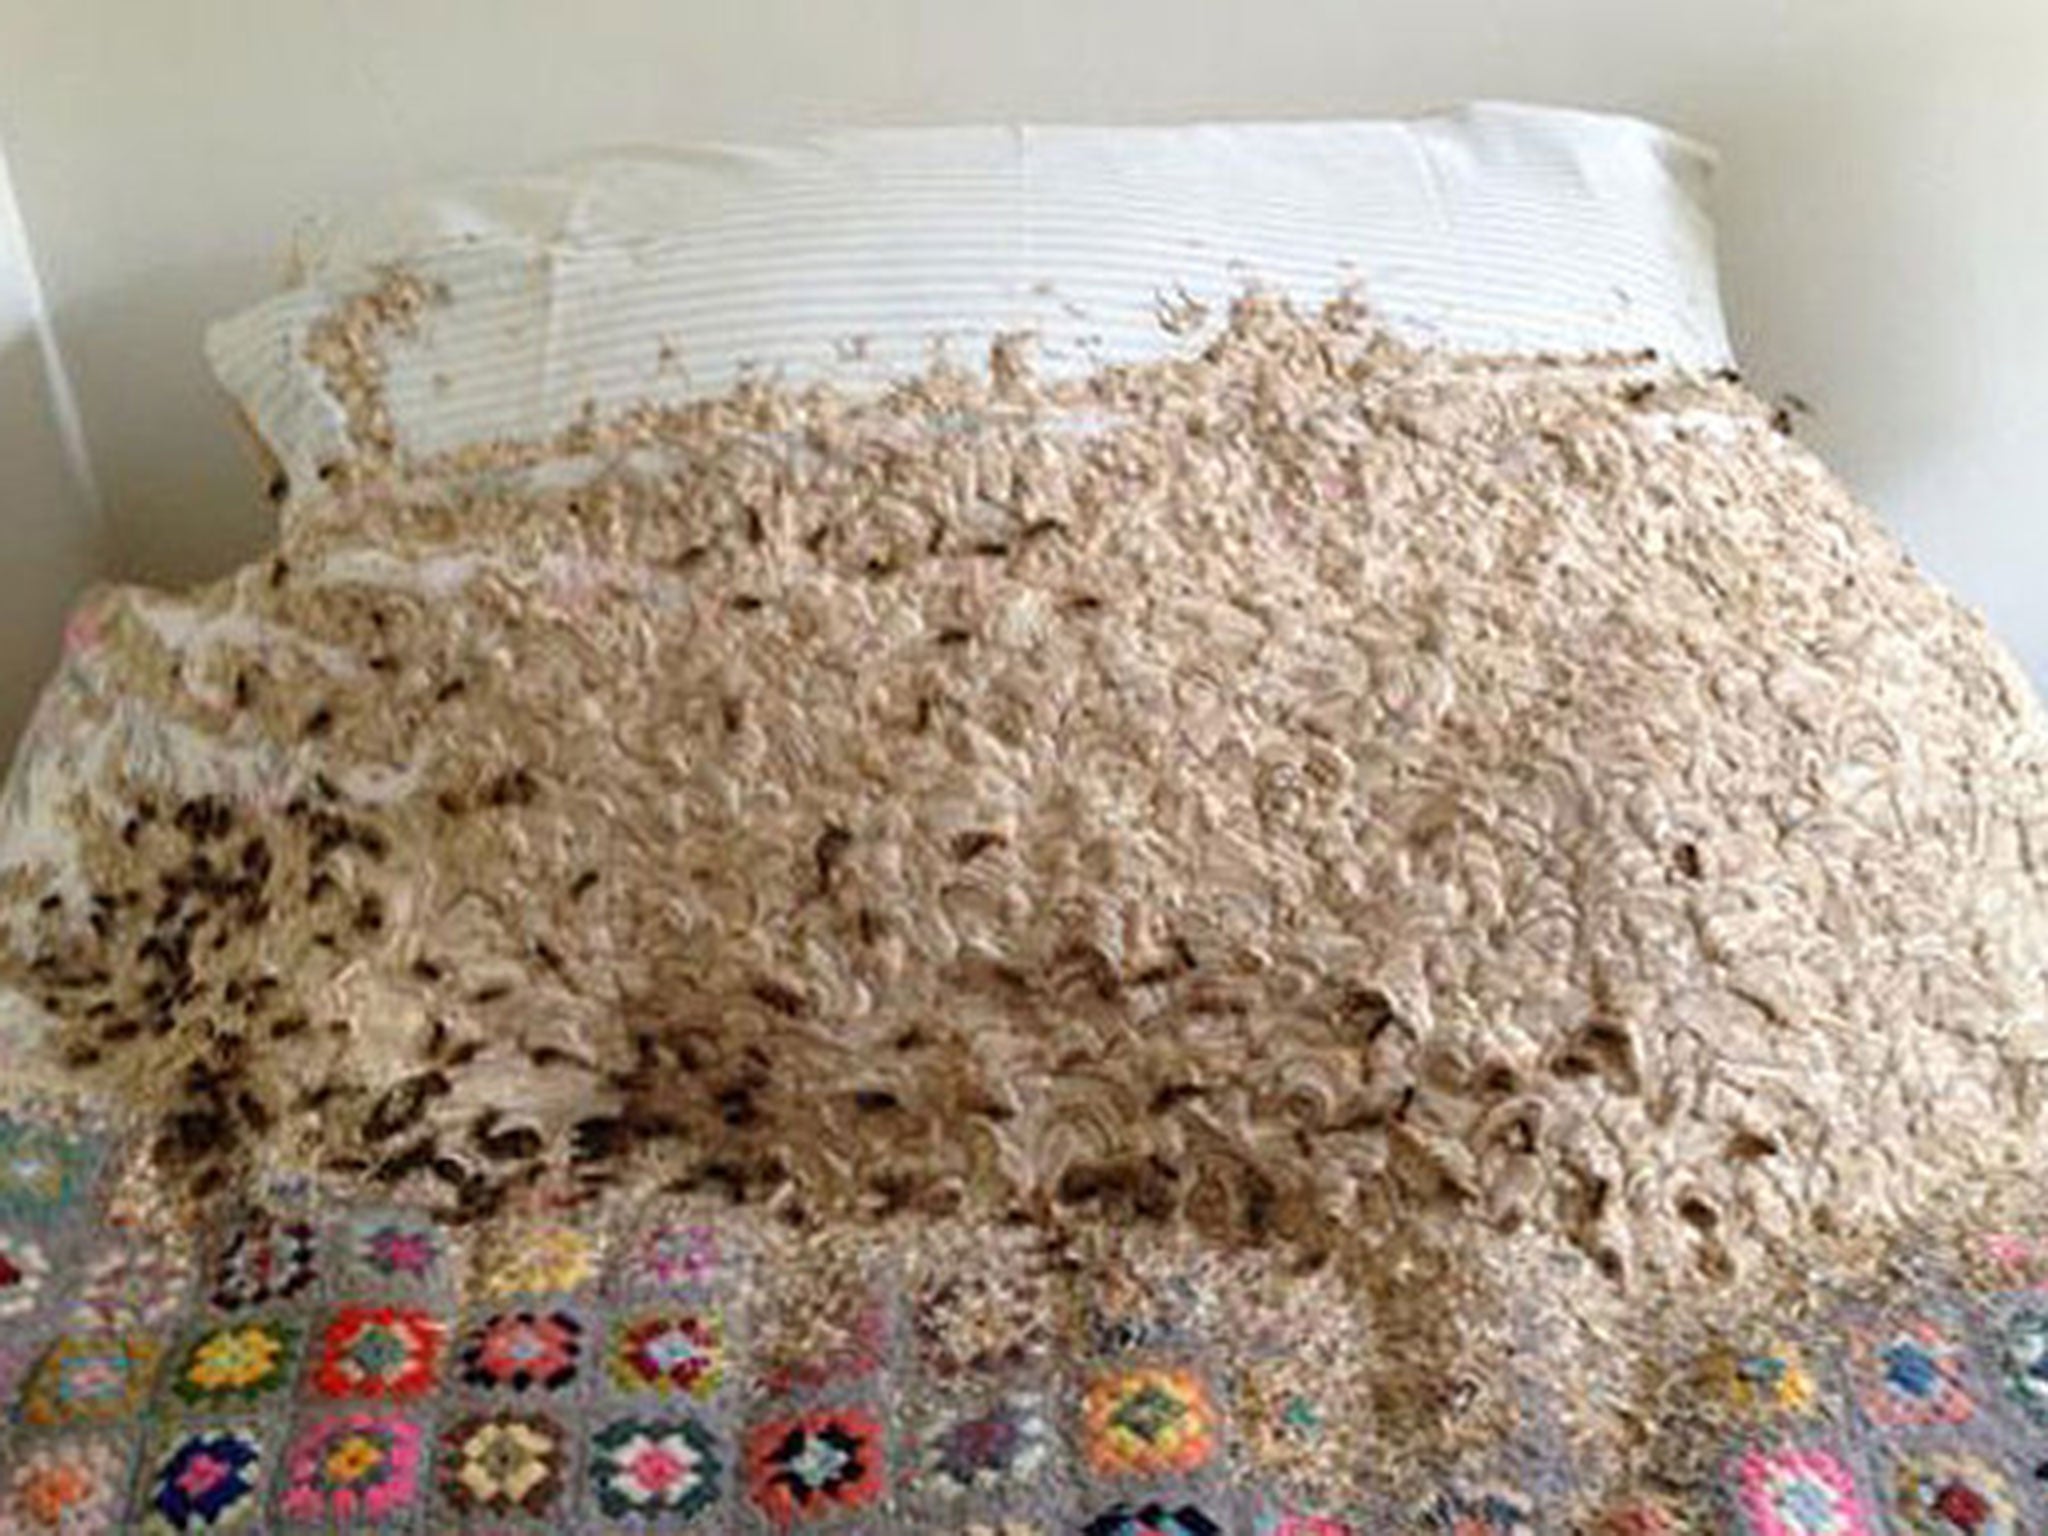 bed bug nest on mattress